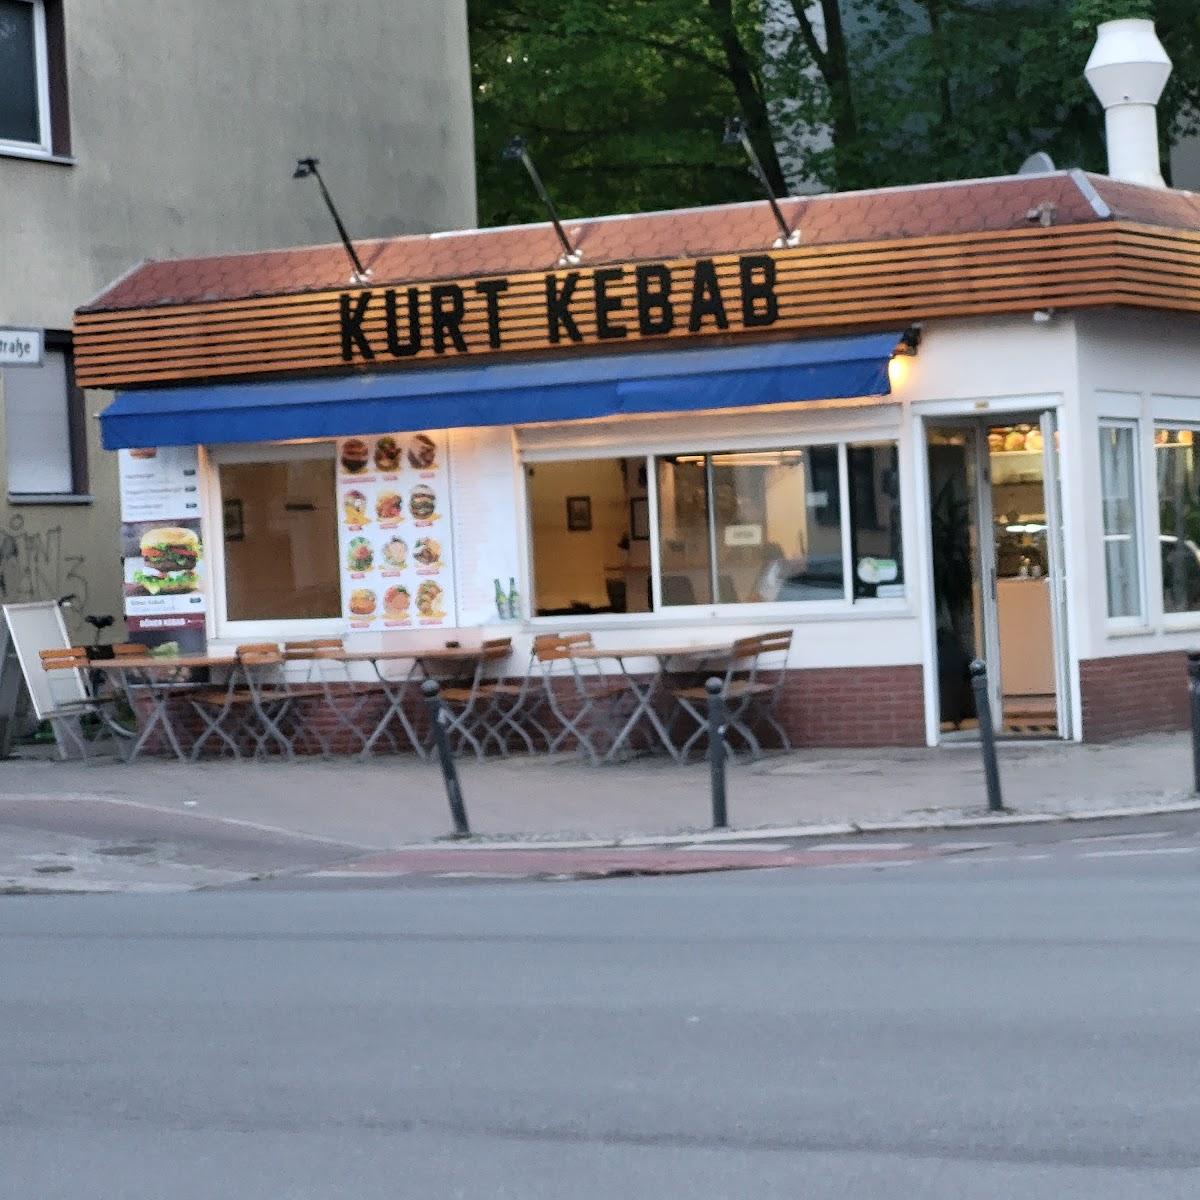 Restaurant "Kurt Kebab" in Berlin